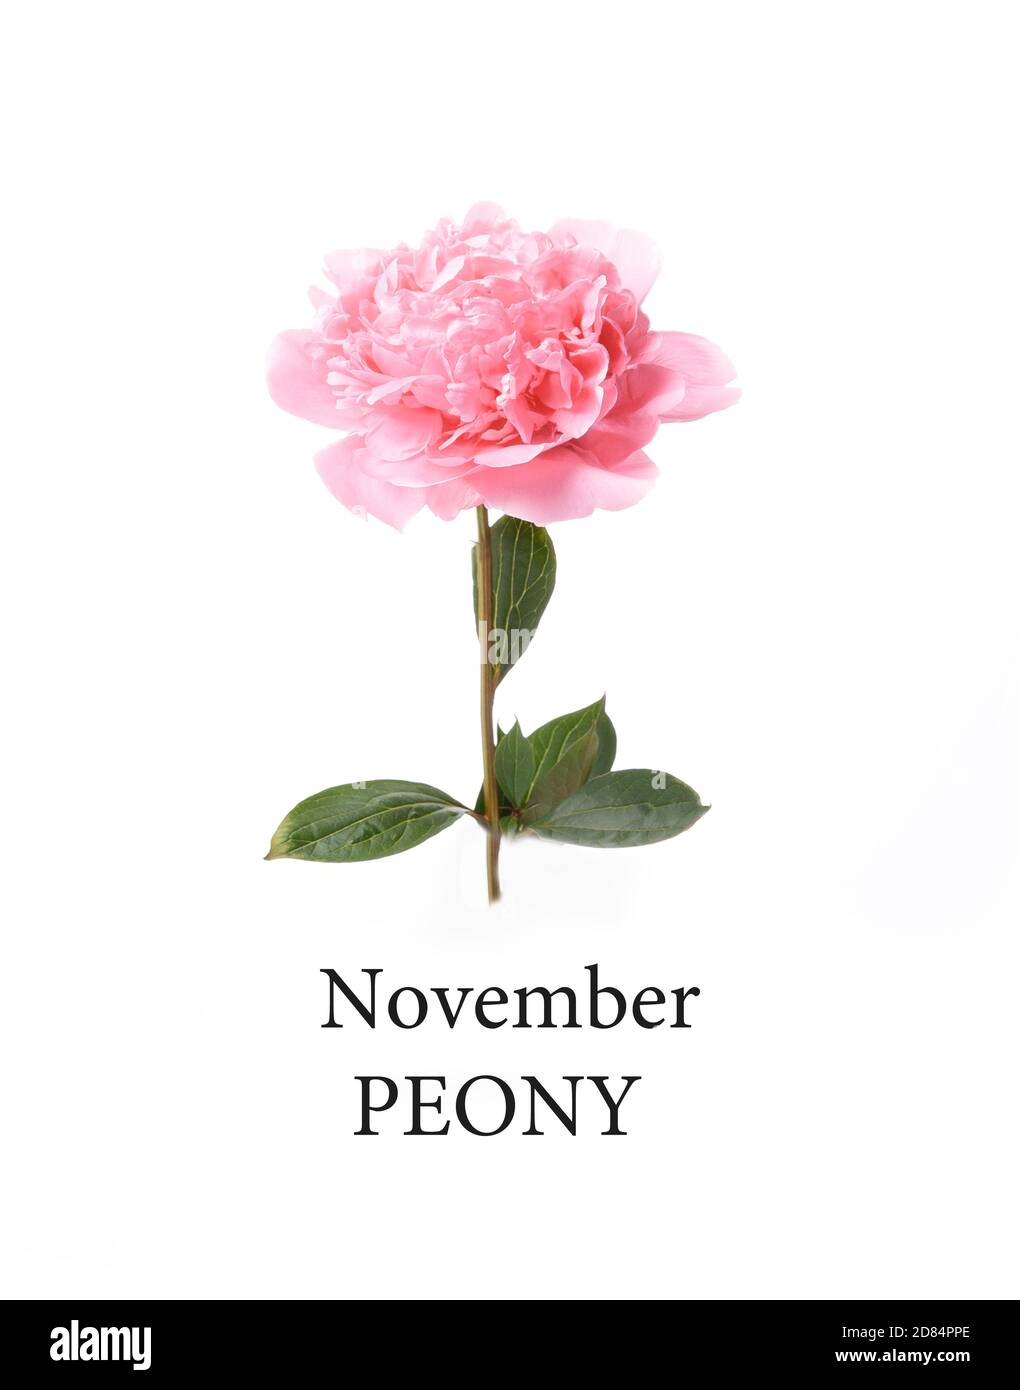 Pfingstrose, November Geburt Blume. Geburt Monat rosa Pfingstrose Blume Foto. Geburtstagsblume Cliparts Stockfoto